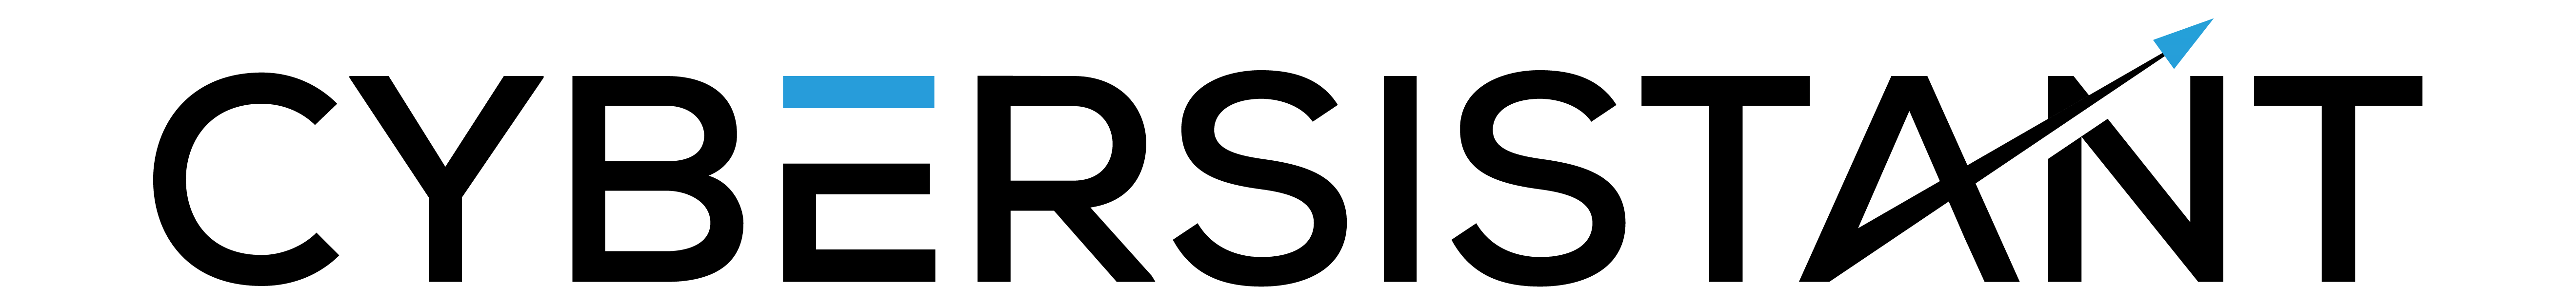 Cybersistant Logo